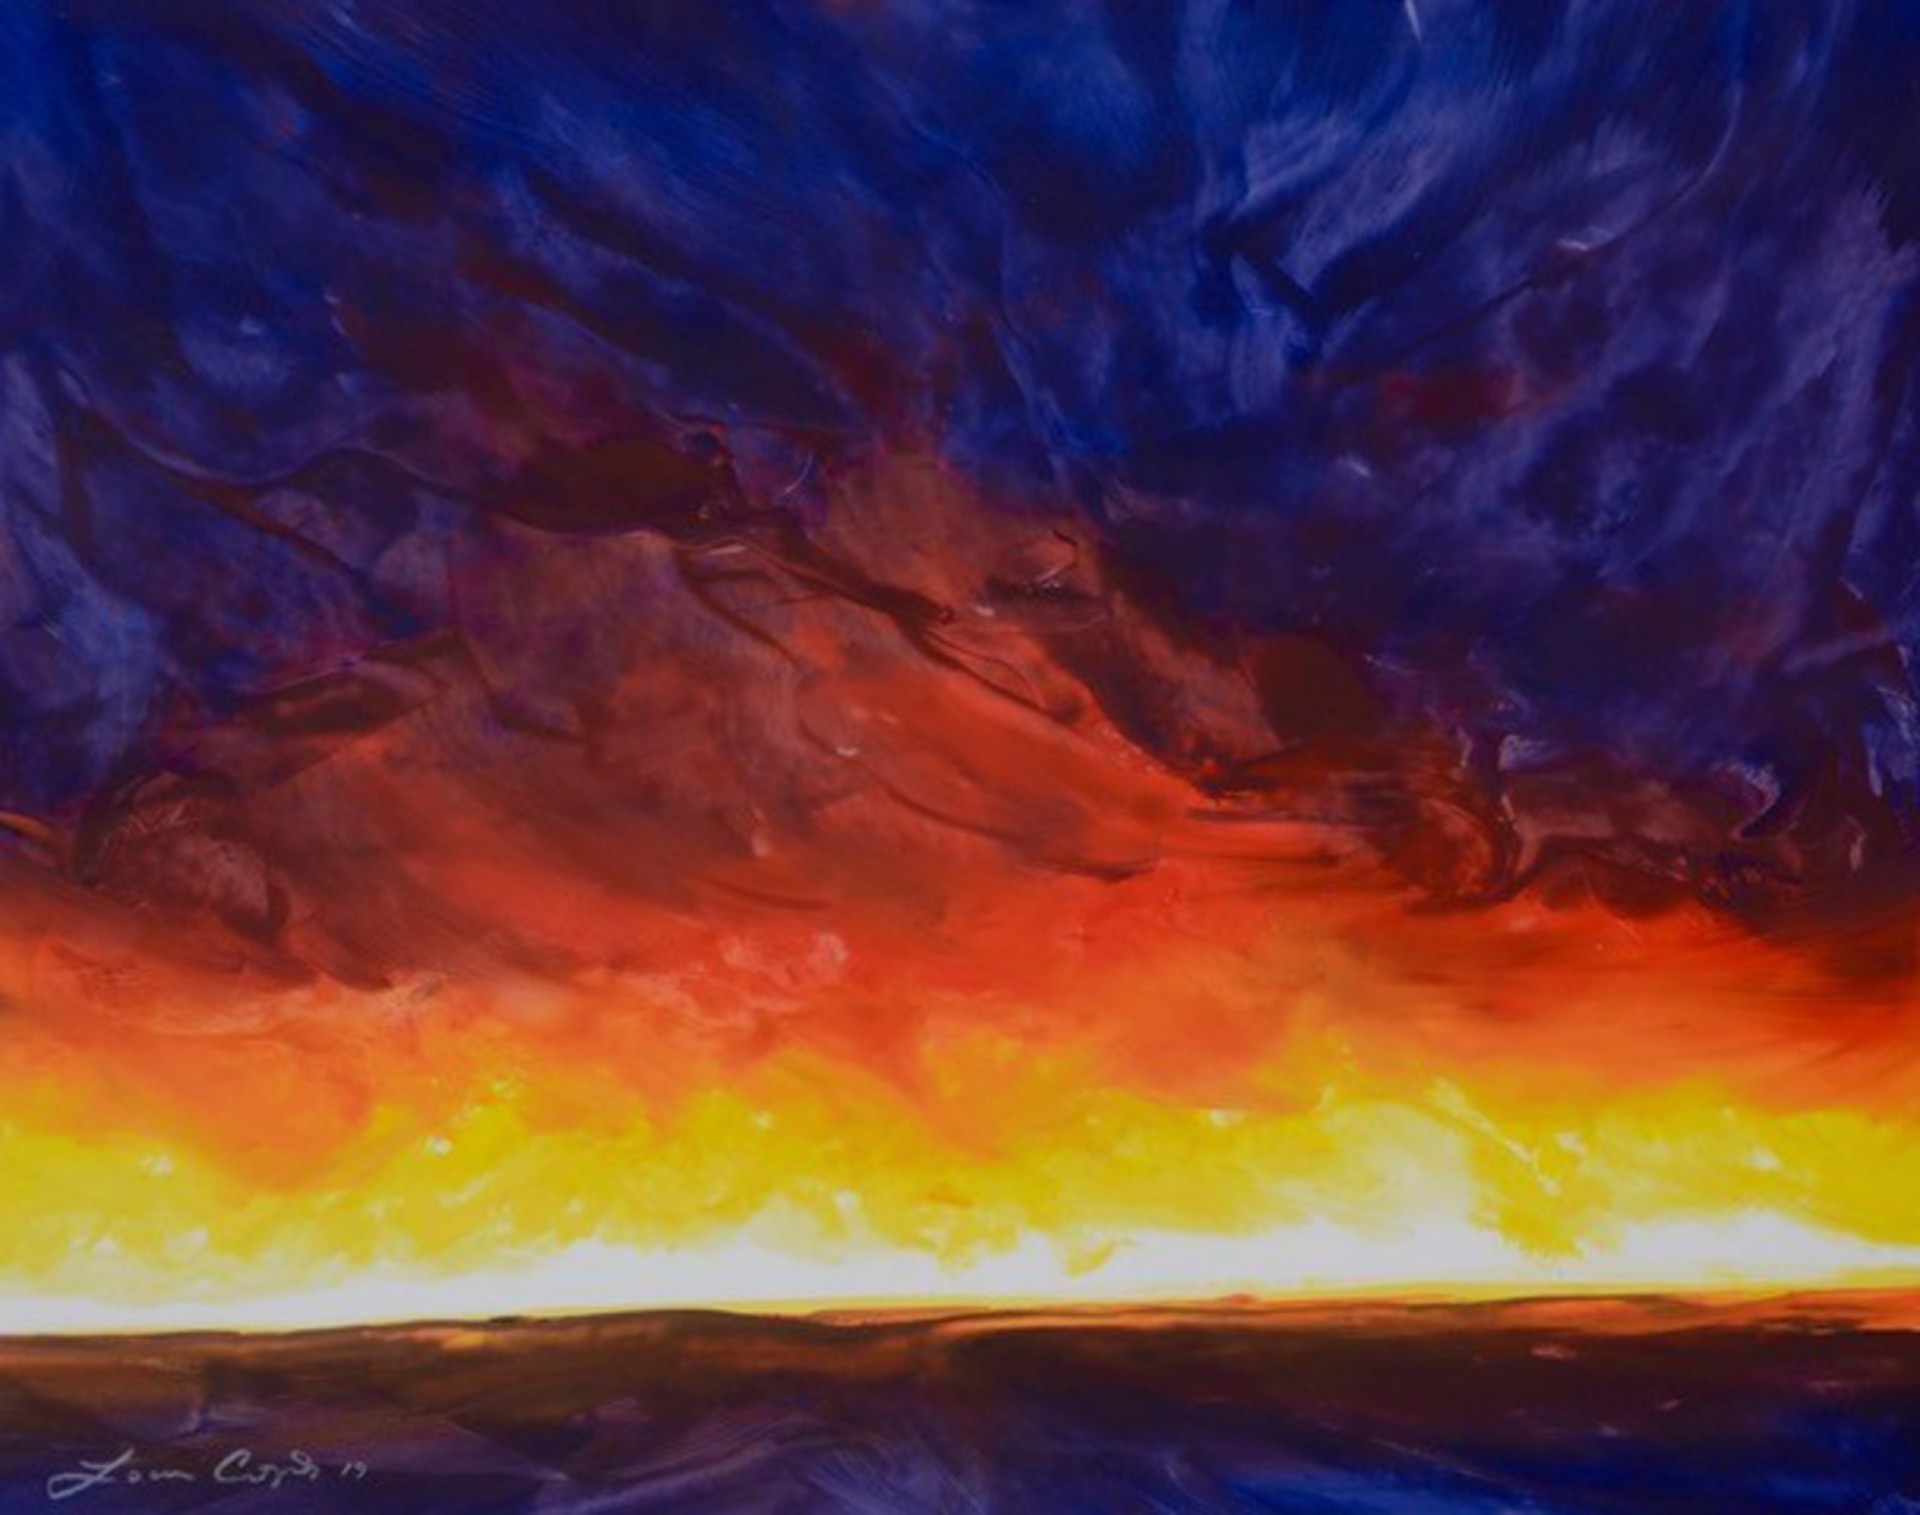 Big Fire by Louis Copt